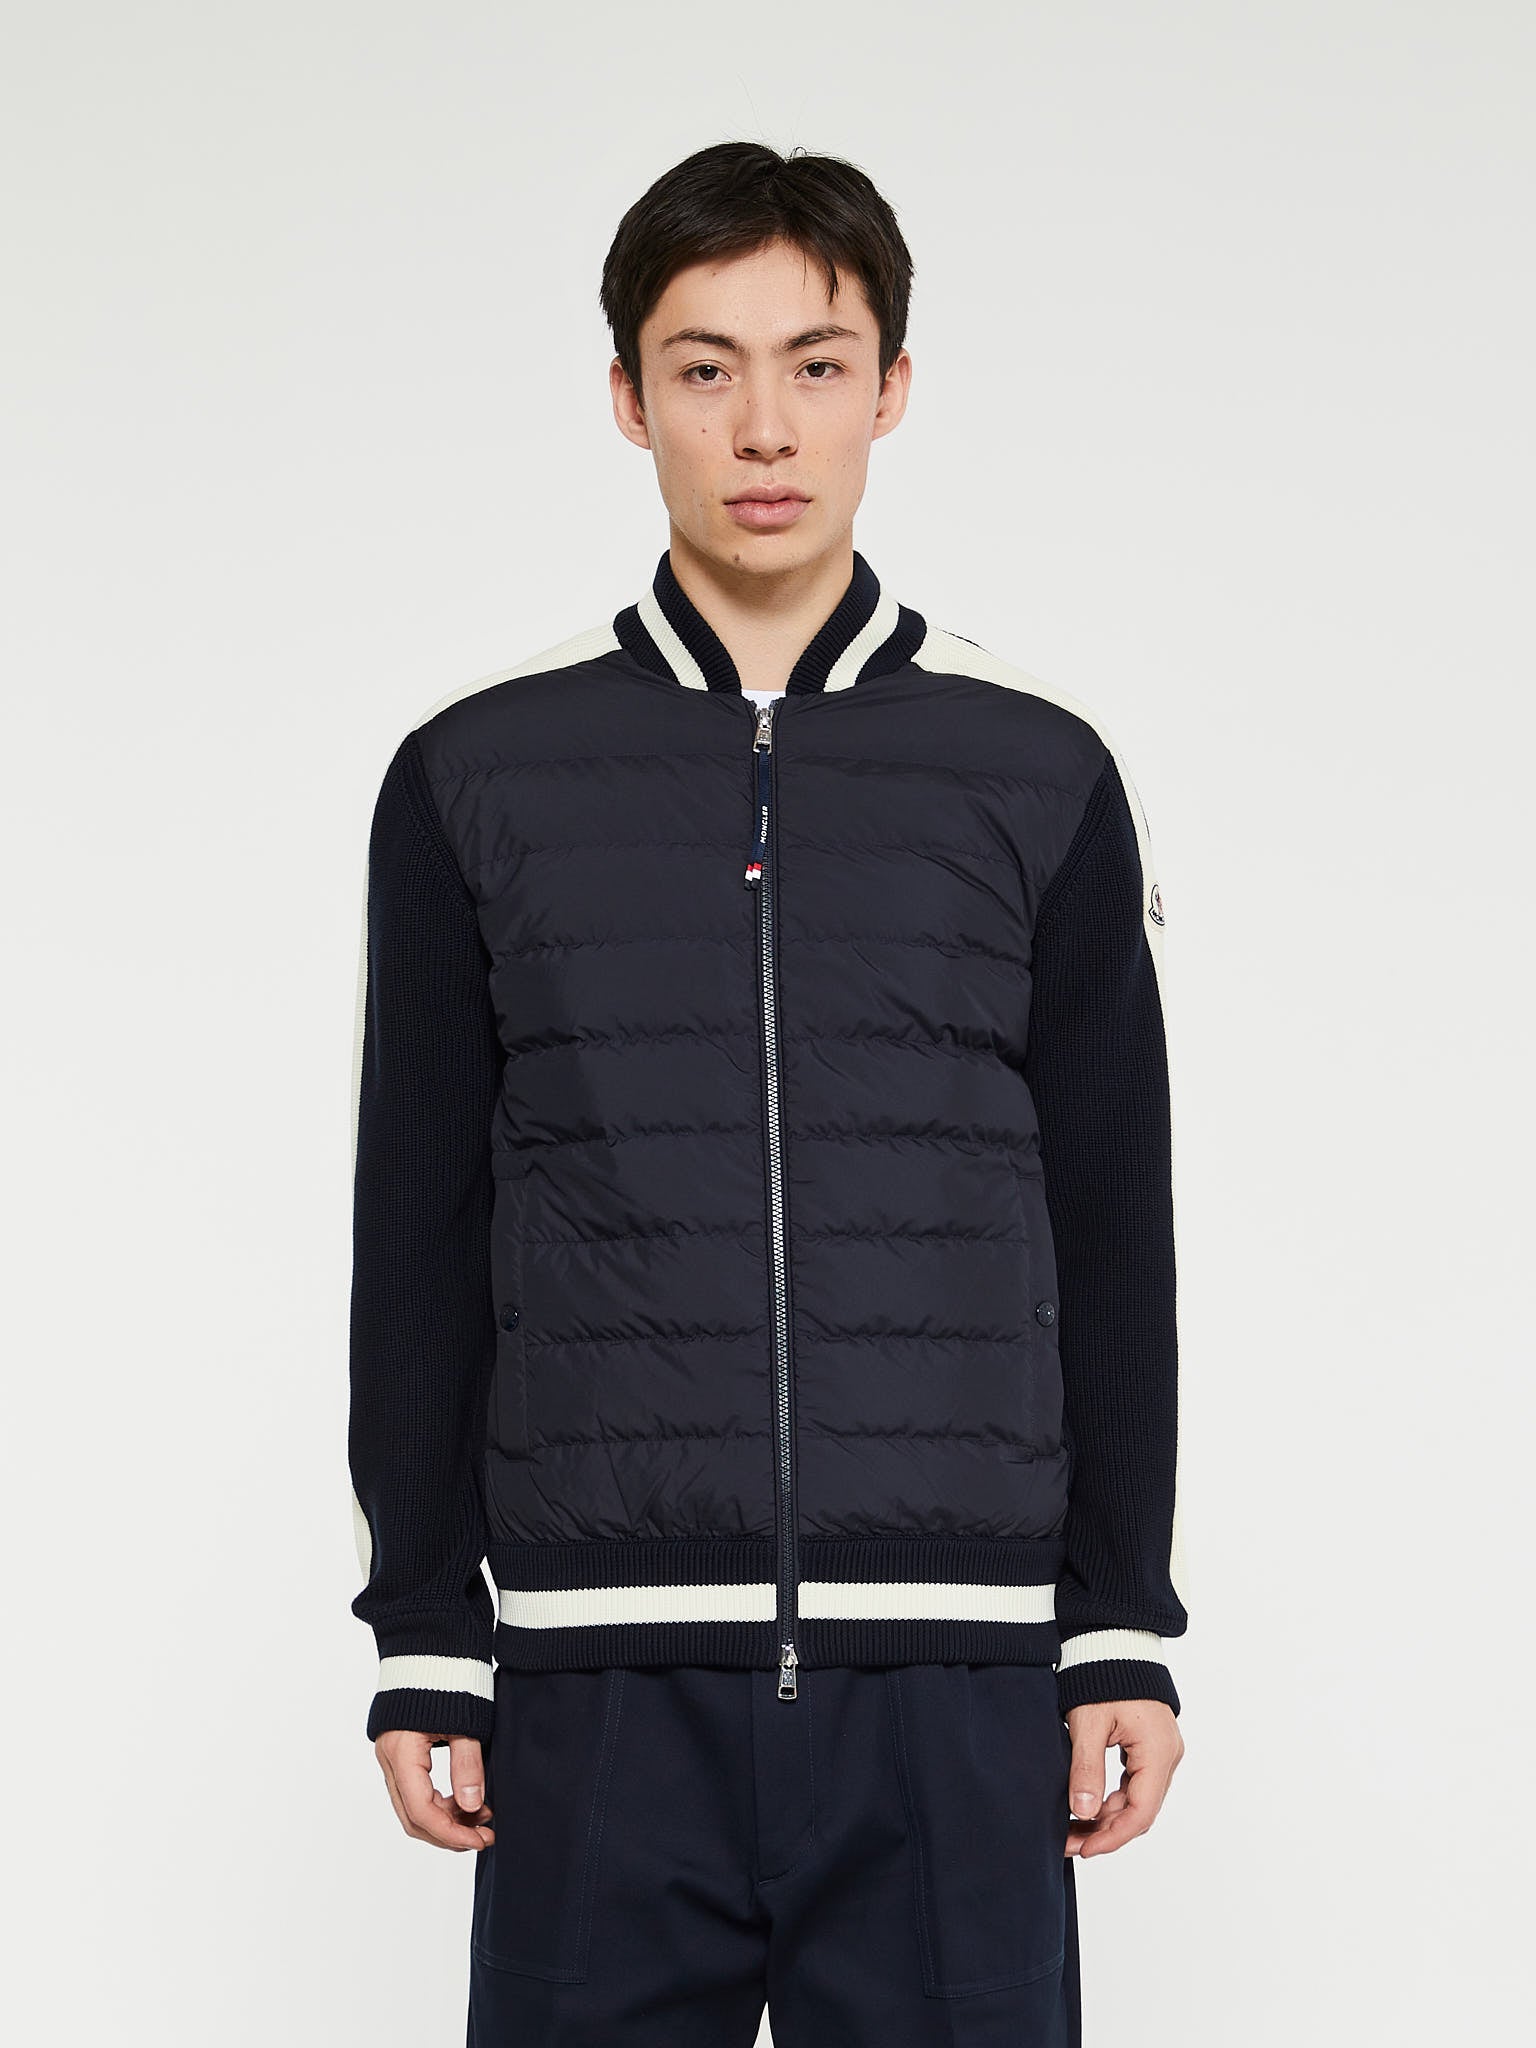 Zunfeo Men Winter Coats- Fashion Slim Jacket Turtleneck Long Sleeve Duster  Cardigan Solid Jacket Black